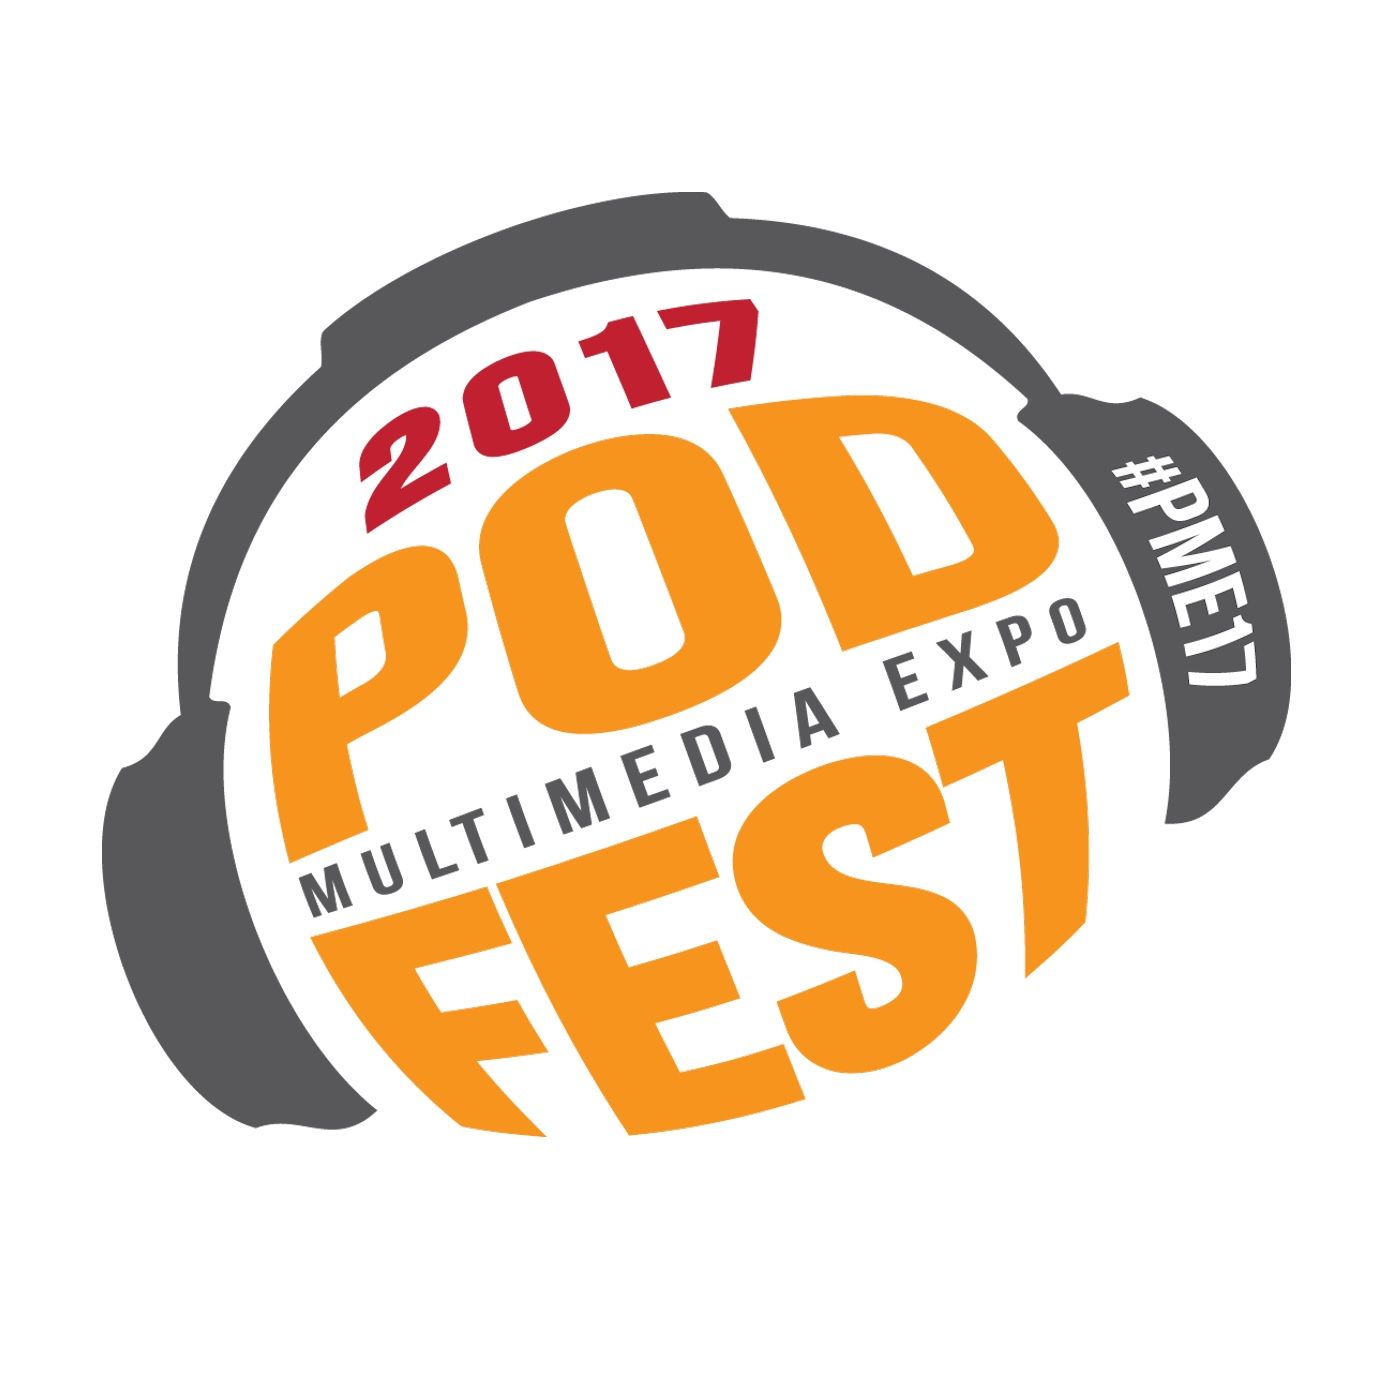 Live from Podfest Multimedia Expo